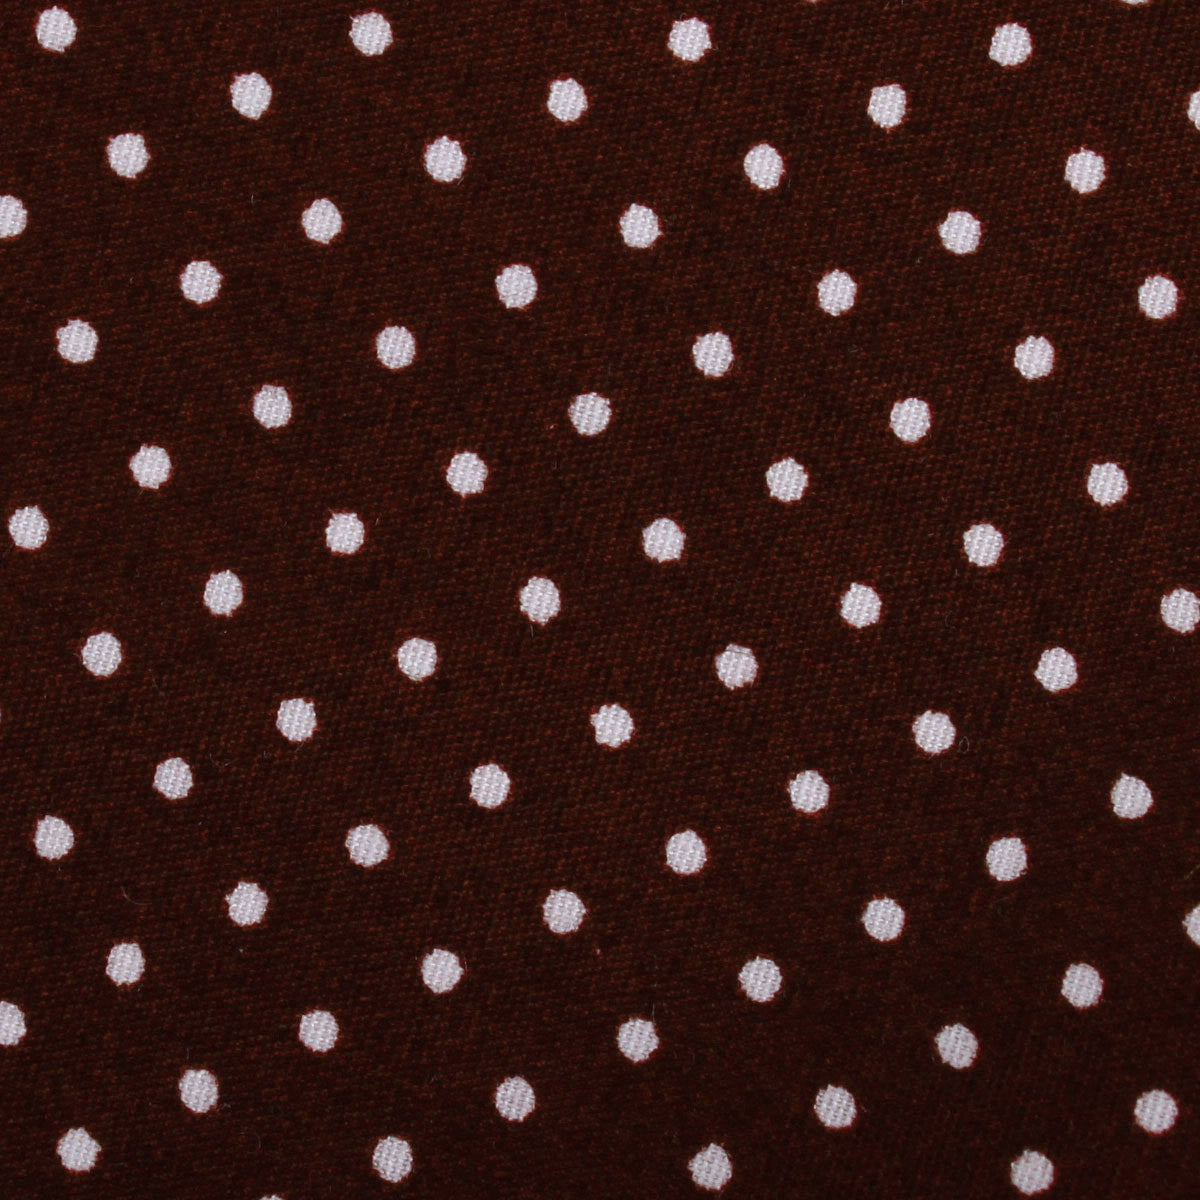 Burgundy Cotton Polkadot Fabric Pocket Square